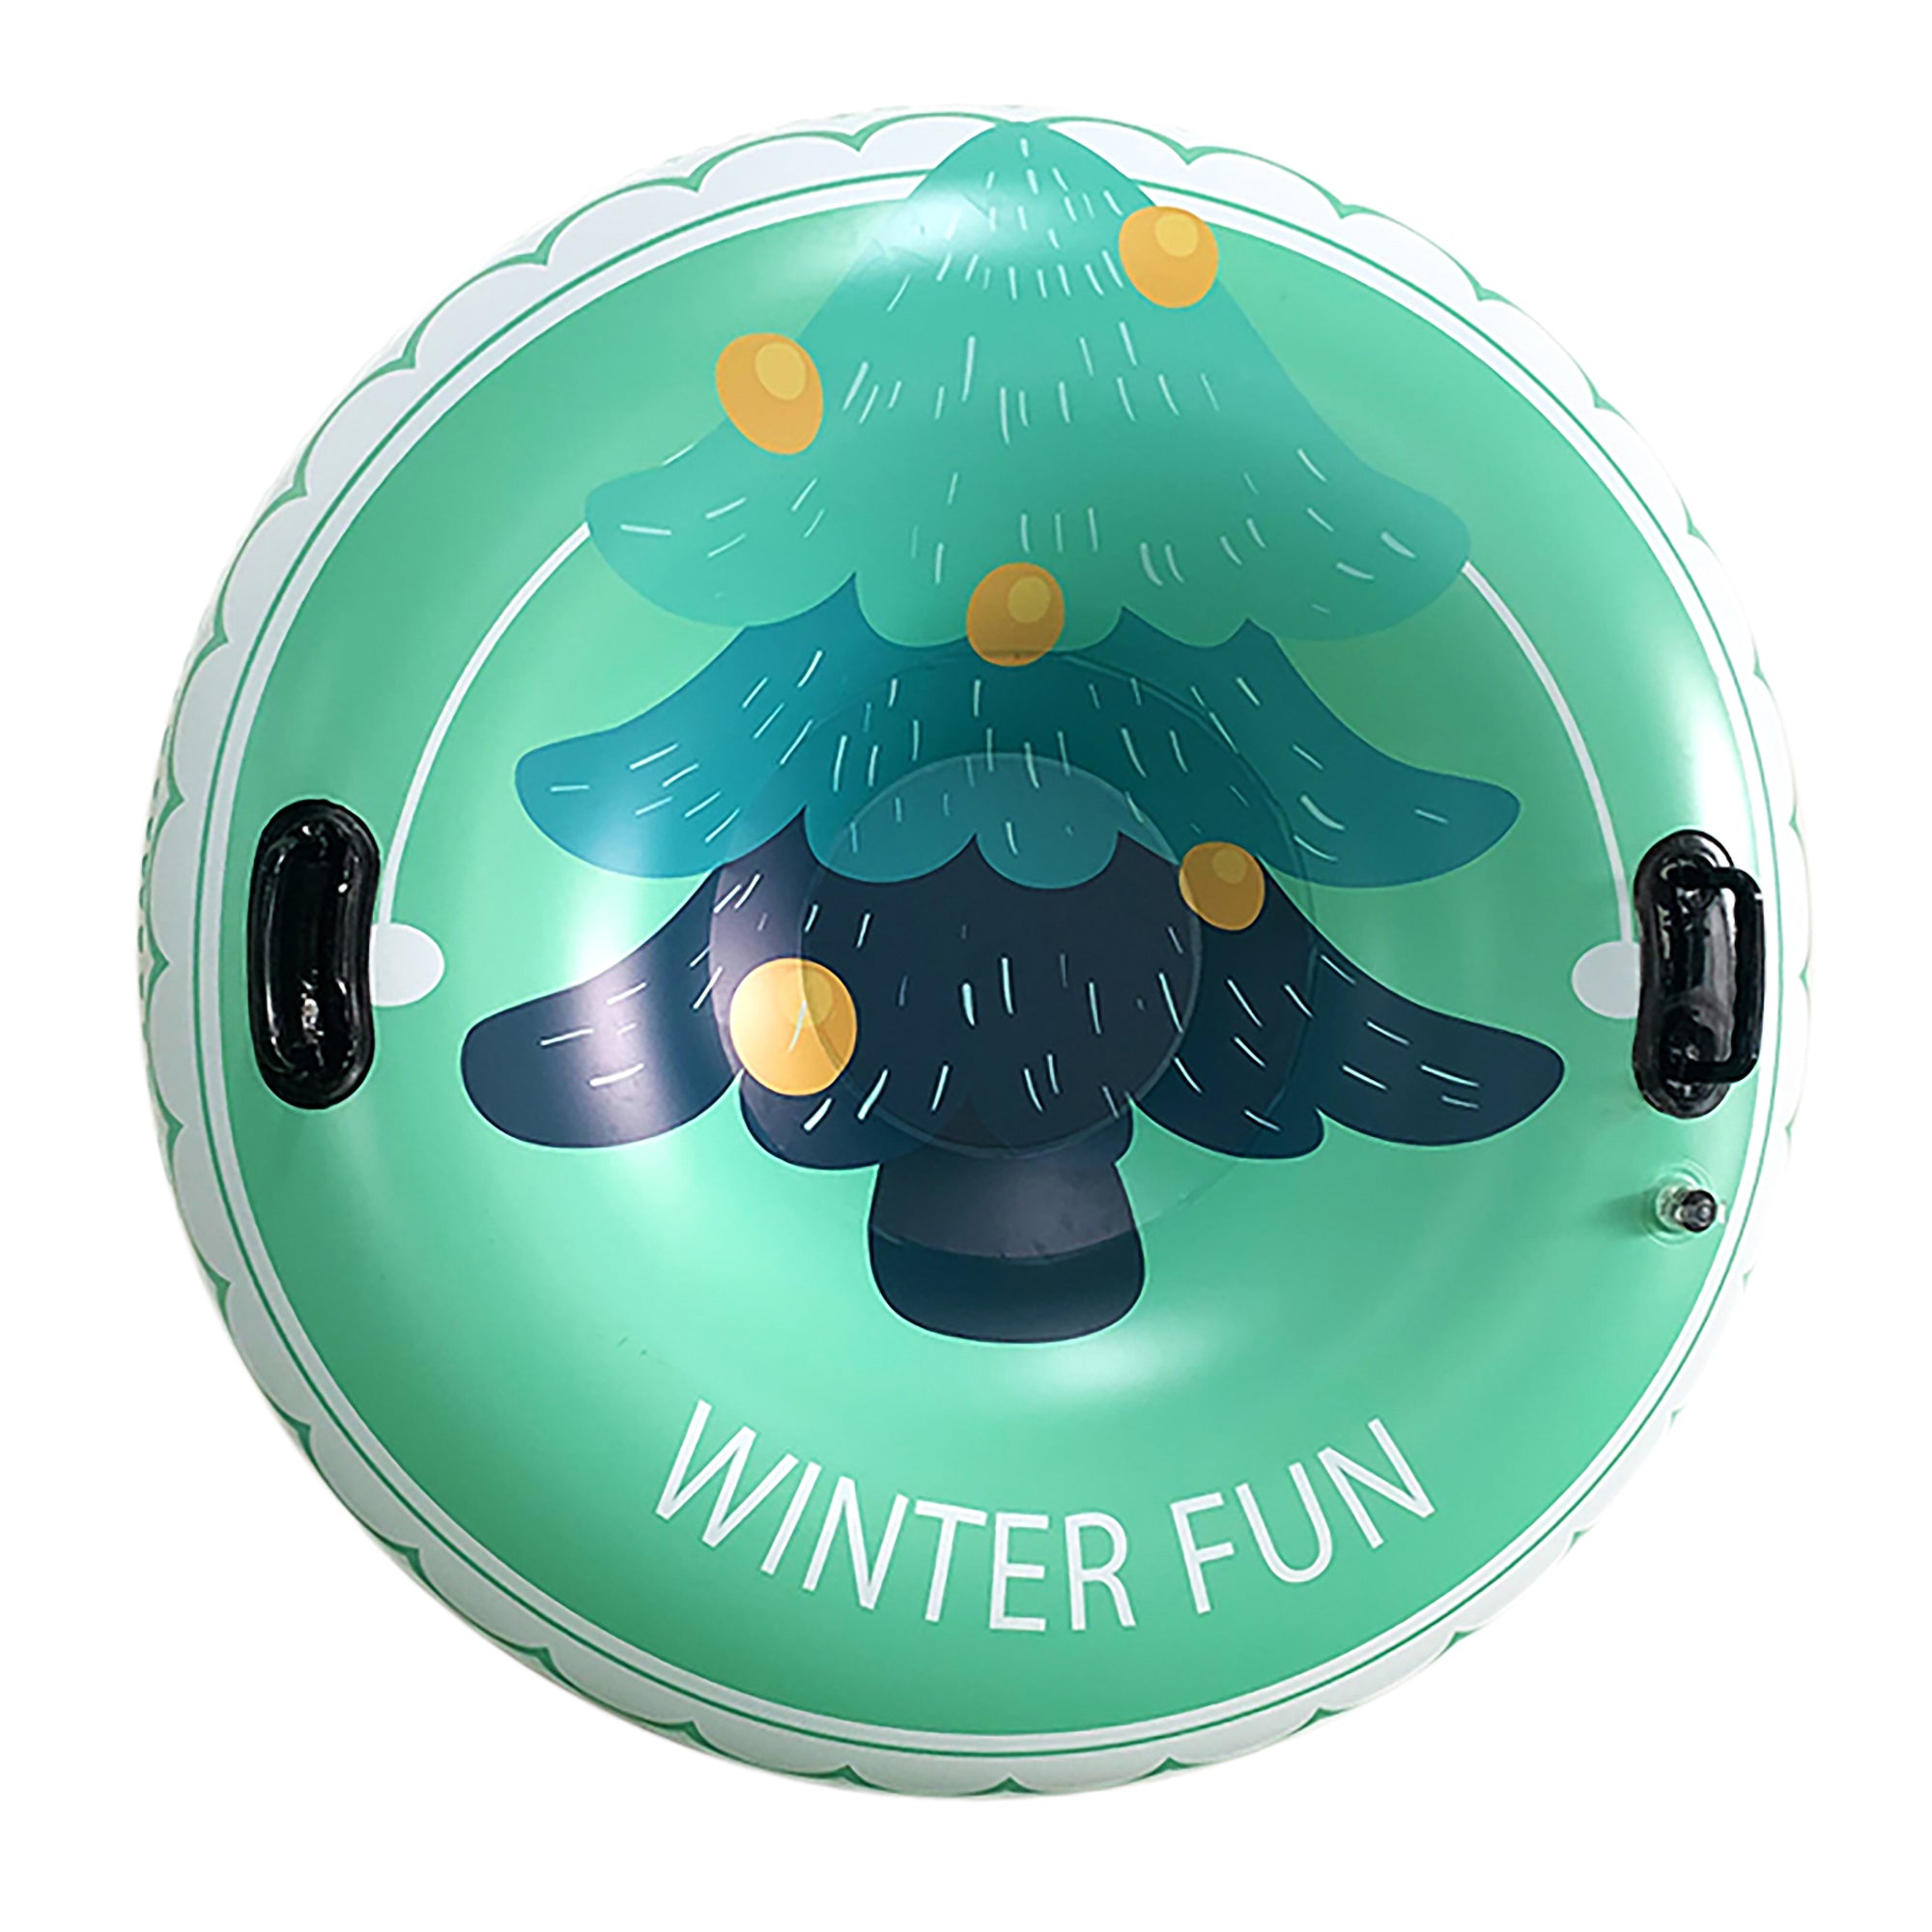 Winter Fun Inflatable Snow Tube 36"